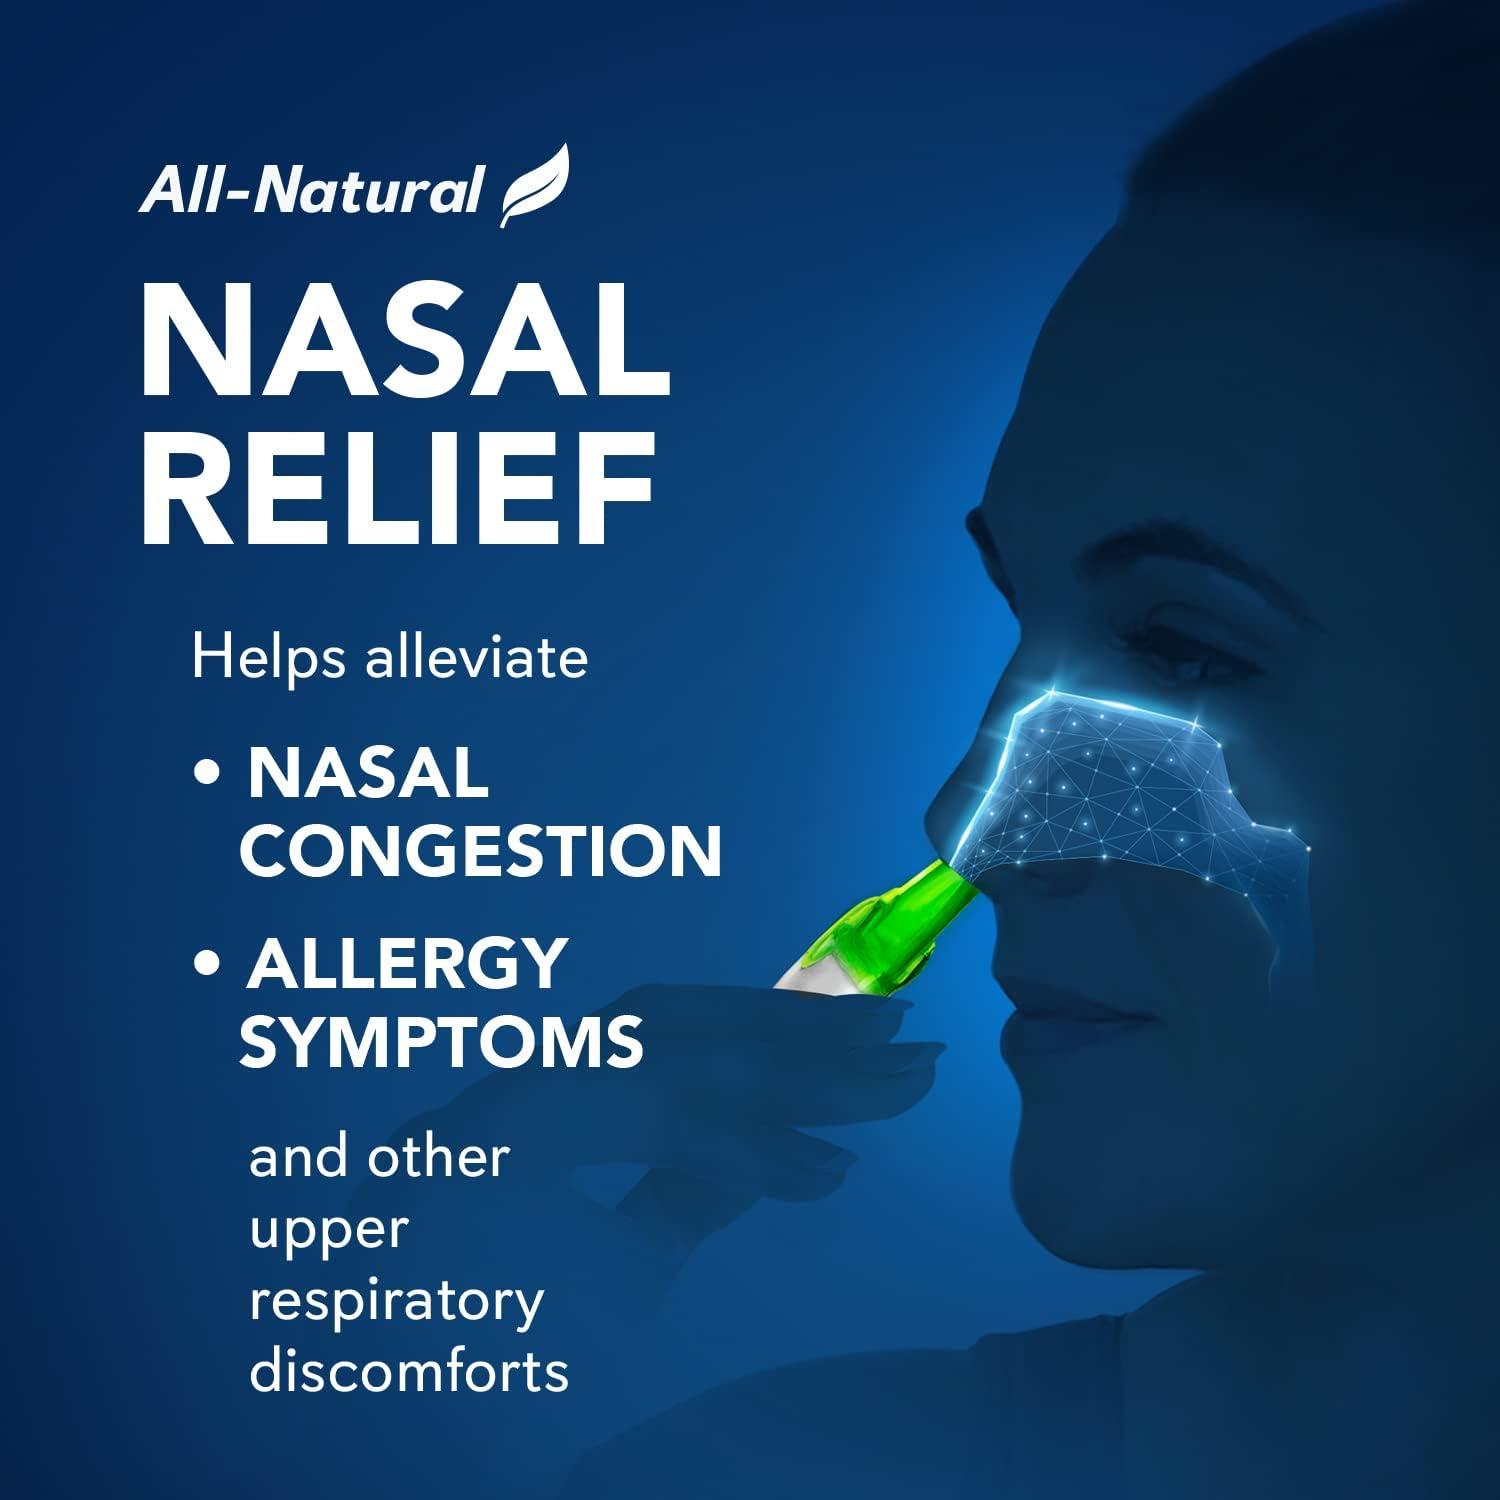 Inhalo Nasal Dry Salt Inhaler